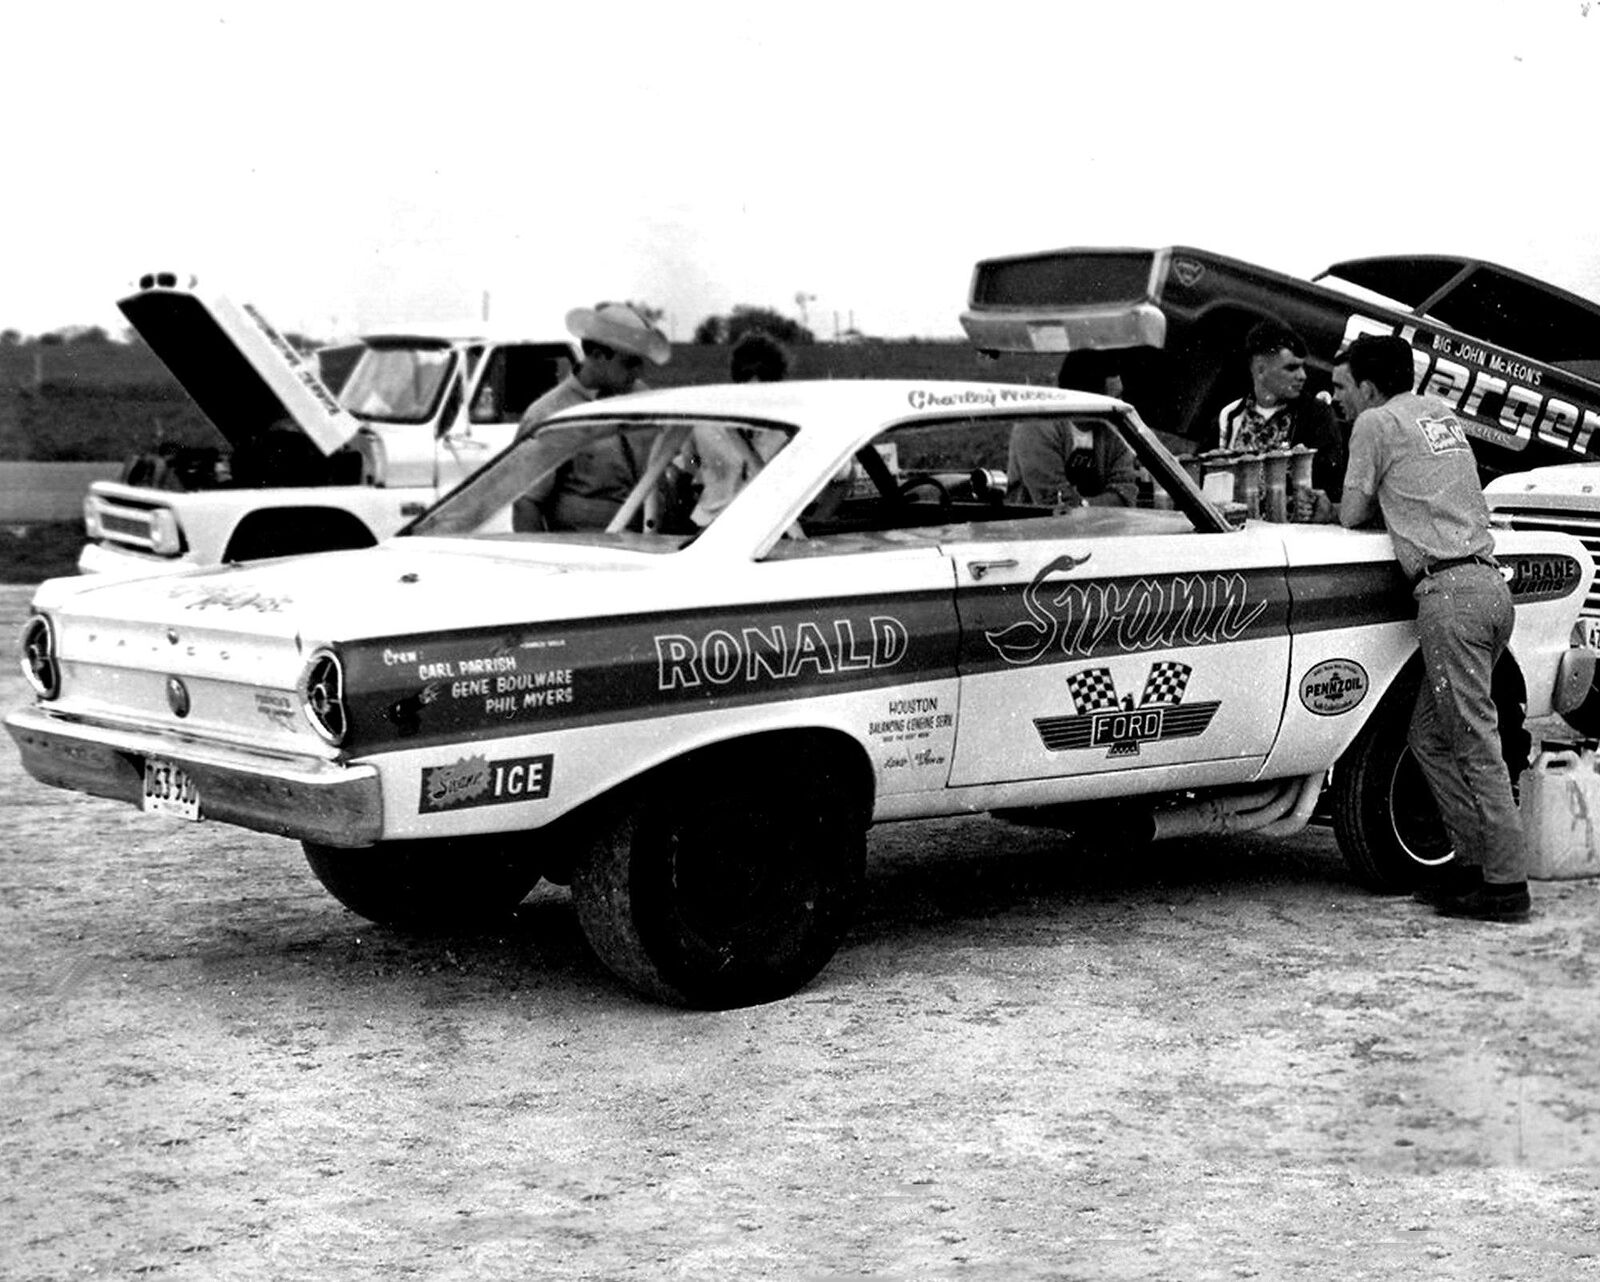 1964 FORD FALCON DRAGSTER 1967 Austin Texas Drag Strip PHOTO (222-L)